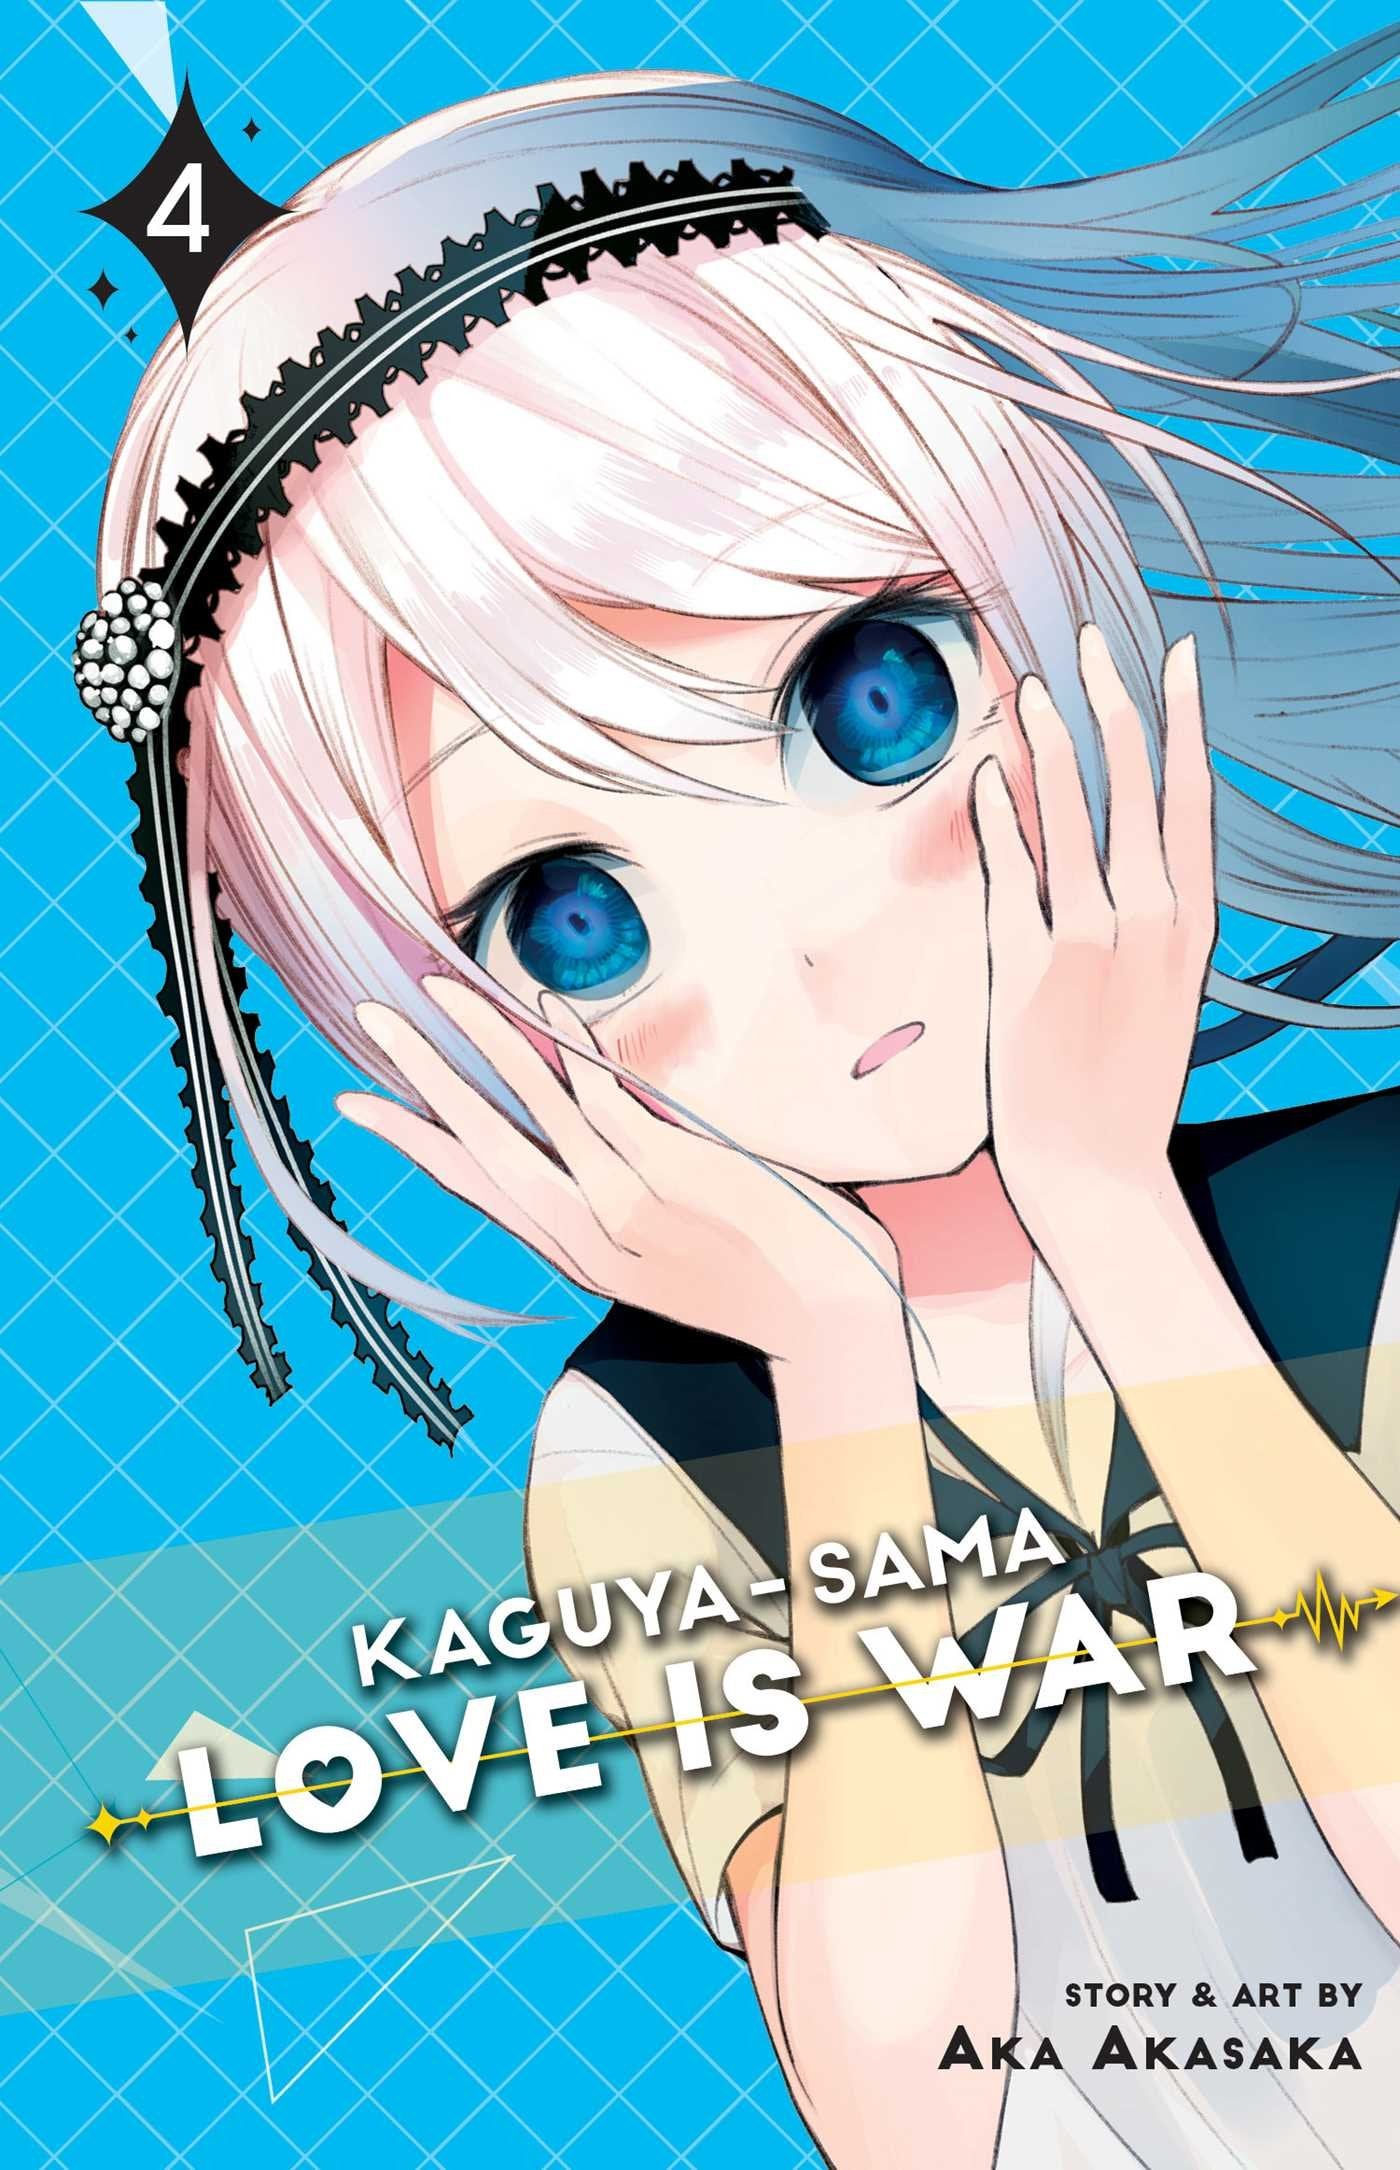 Kaguya-sama: Love is War! #04 - Fantasy Spells